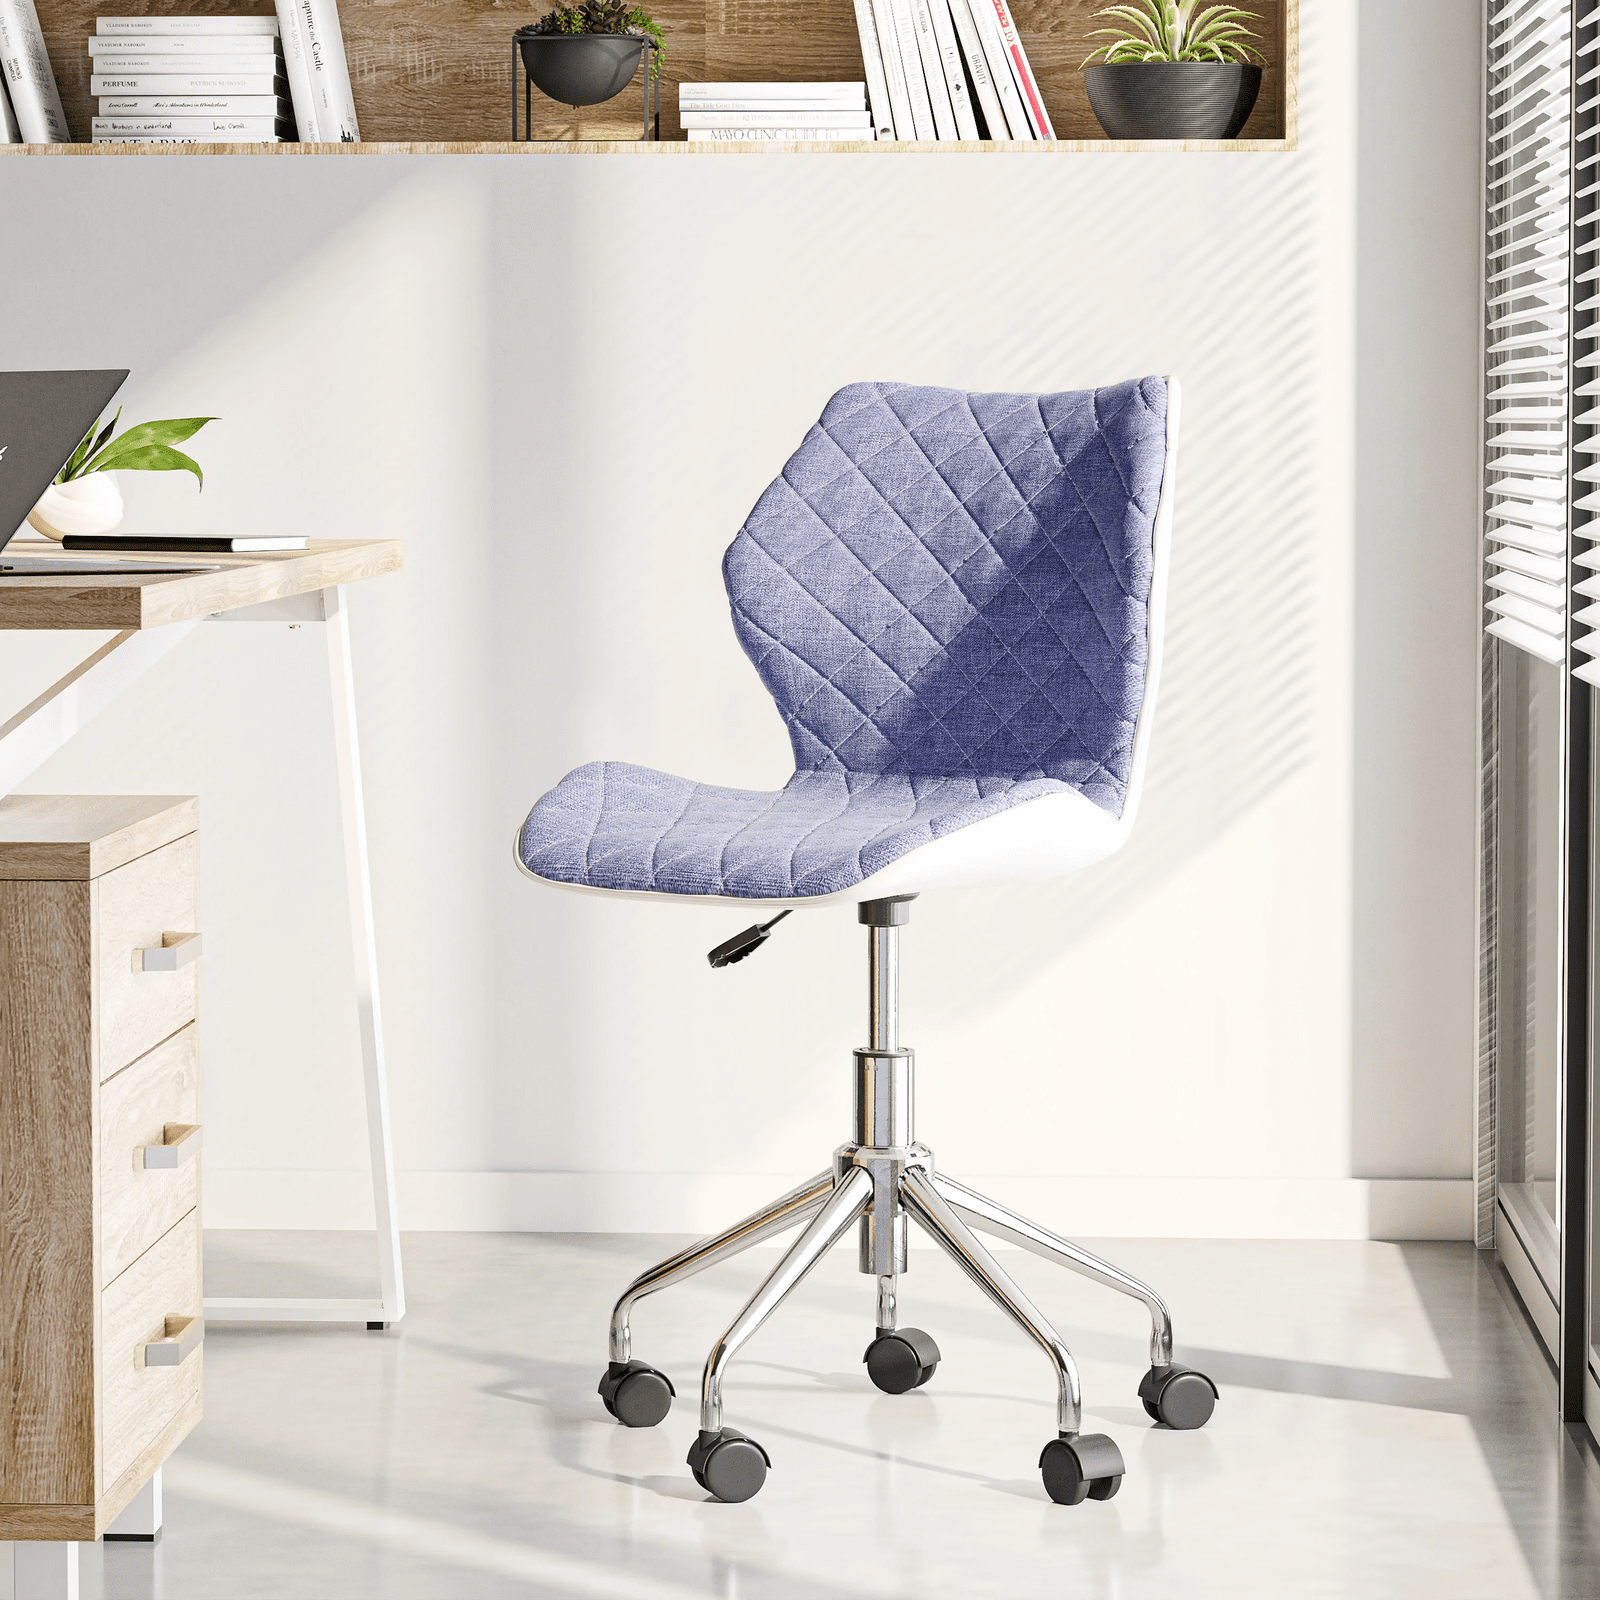 Techni Mobili Modern Height Adjustable Office Task Chair, Blue Techni Mobili Chairs